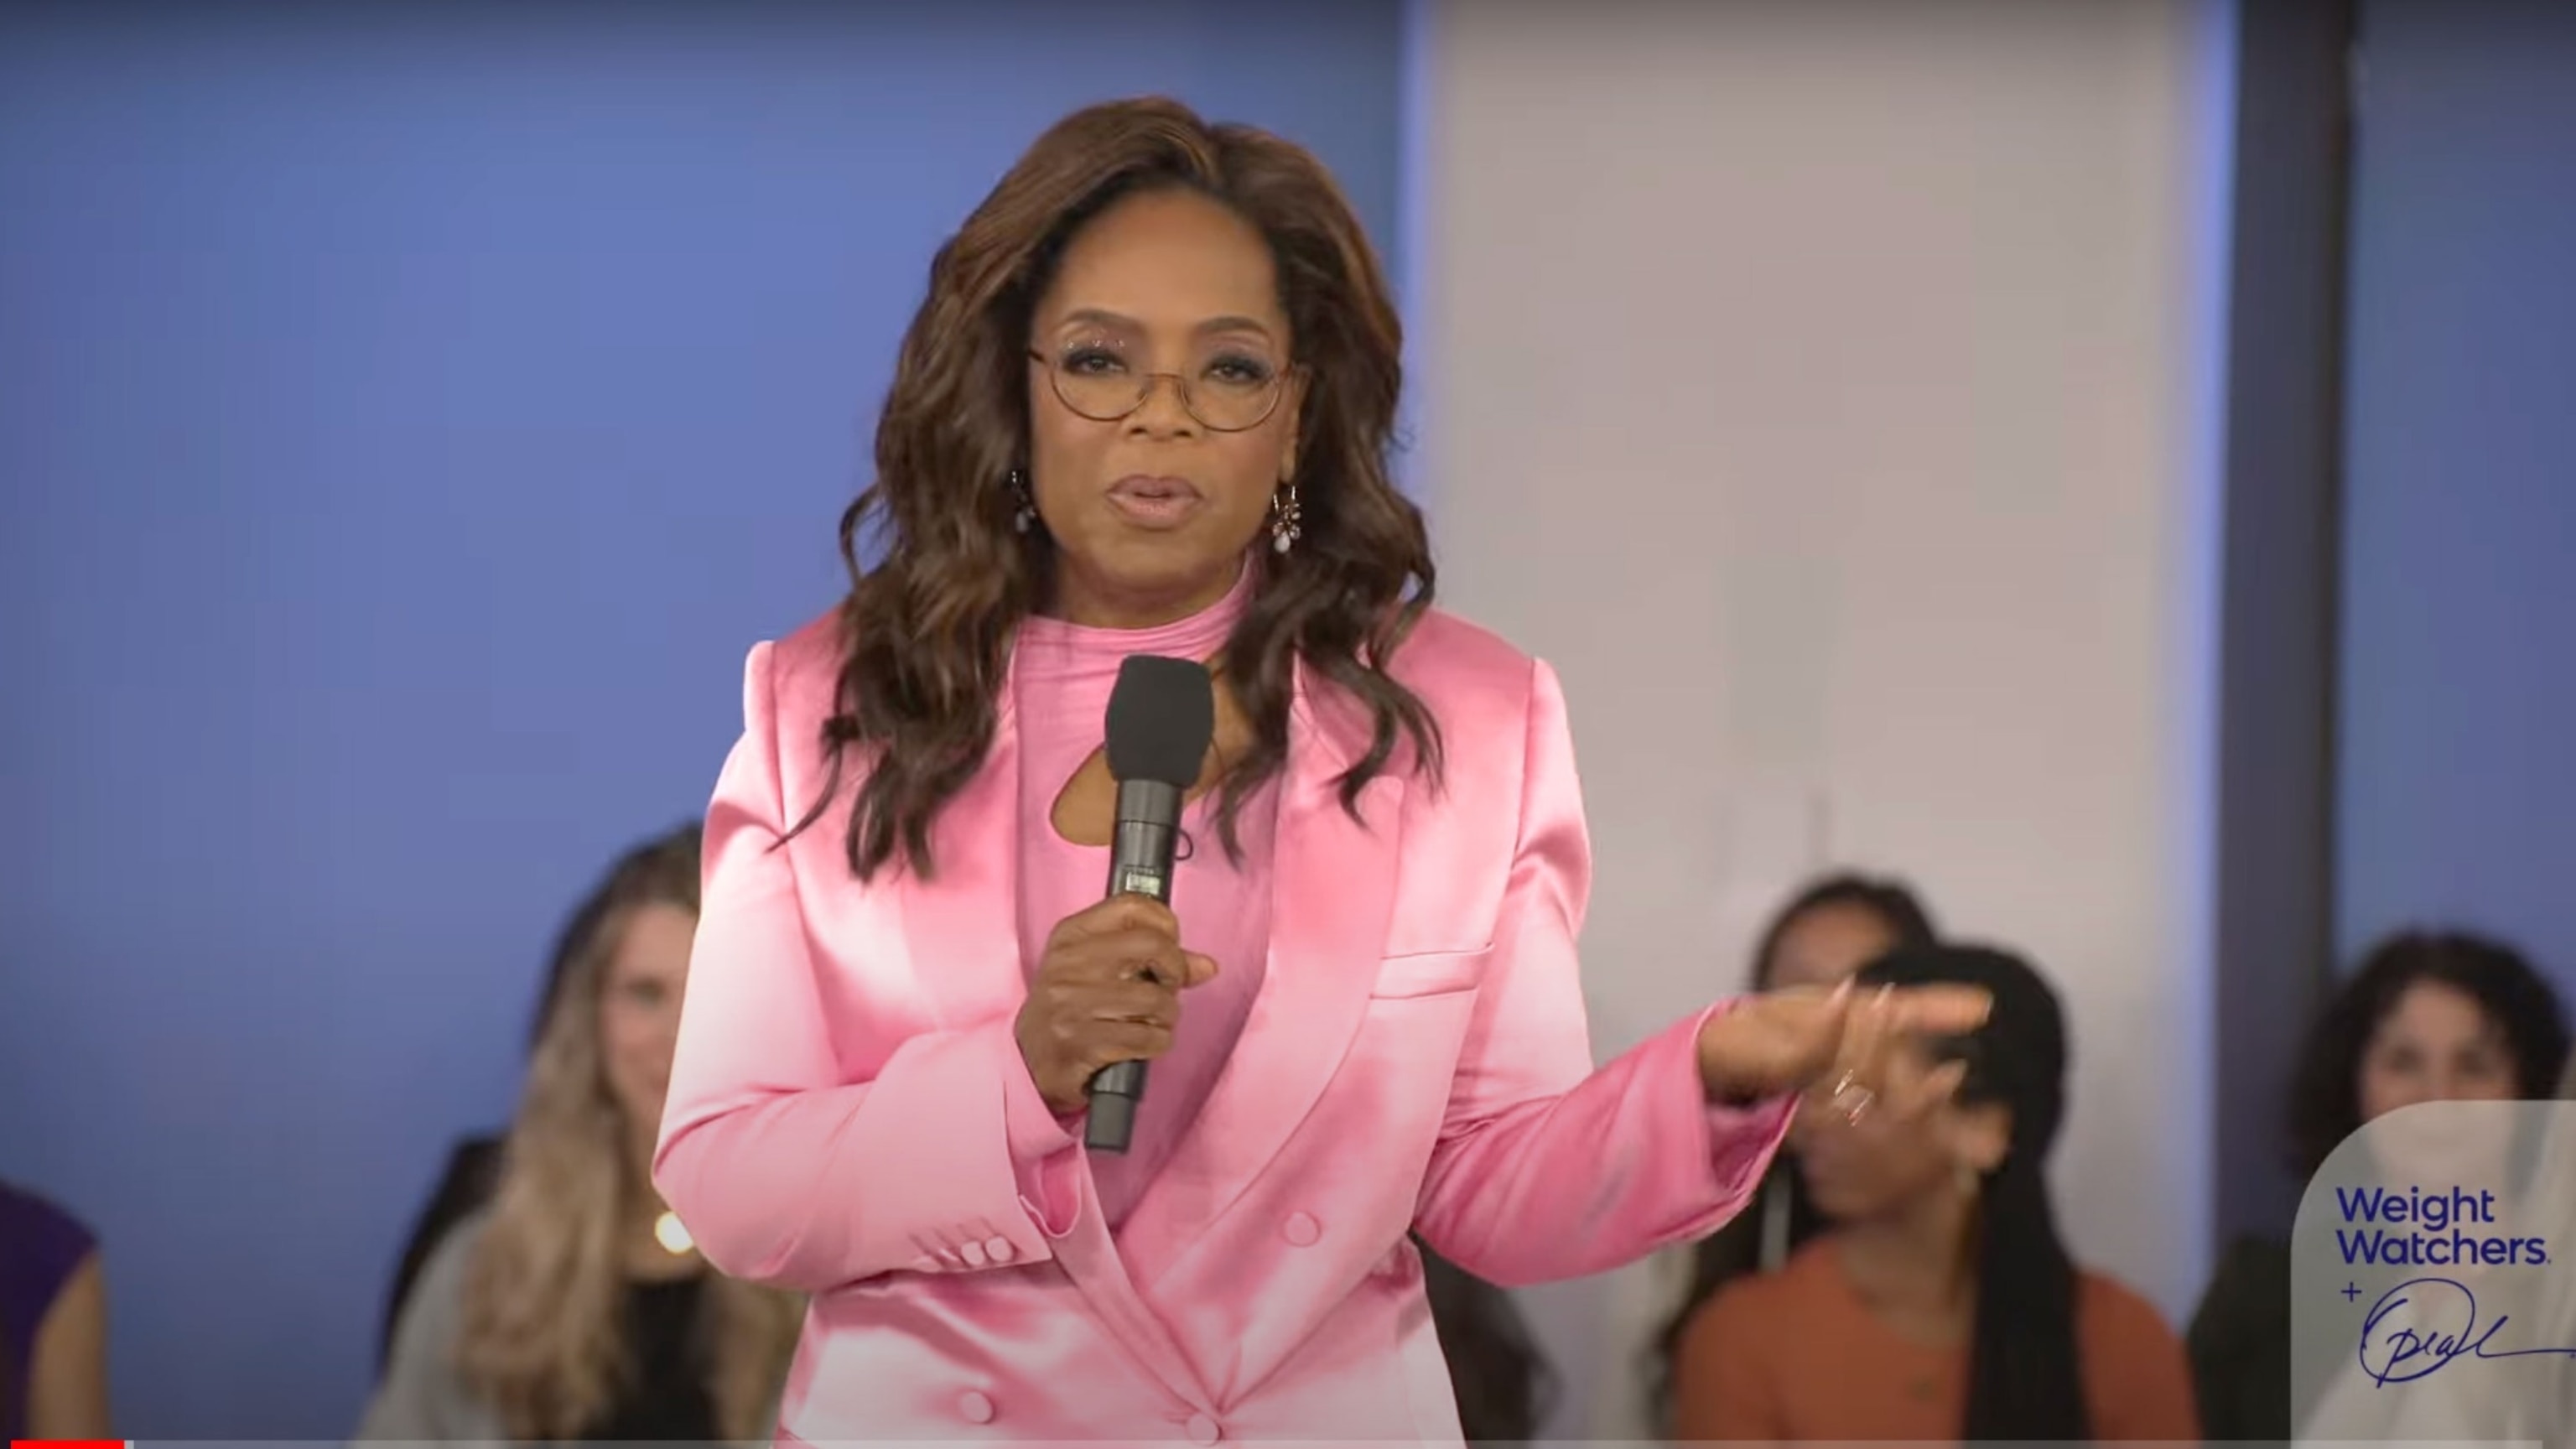 PHOTO: Oprah Winfrey is seen hosting a Weight Watchers special.